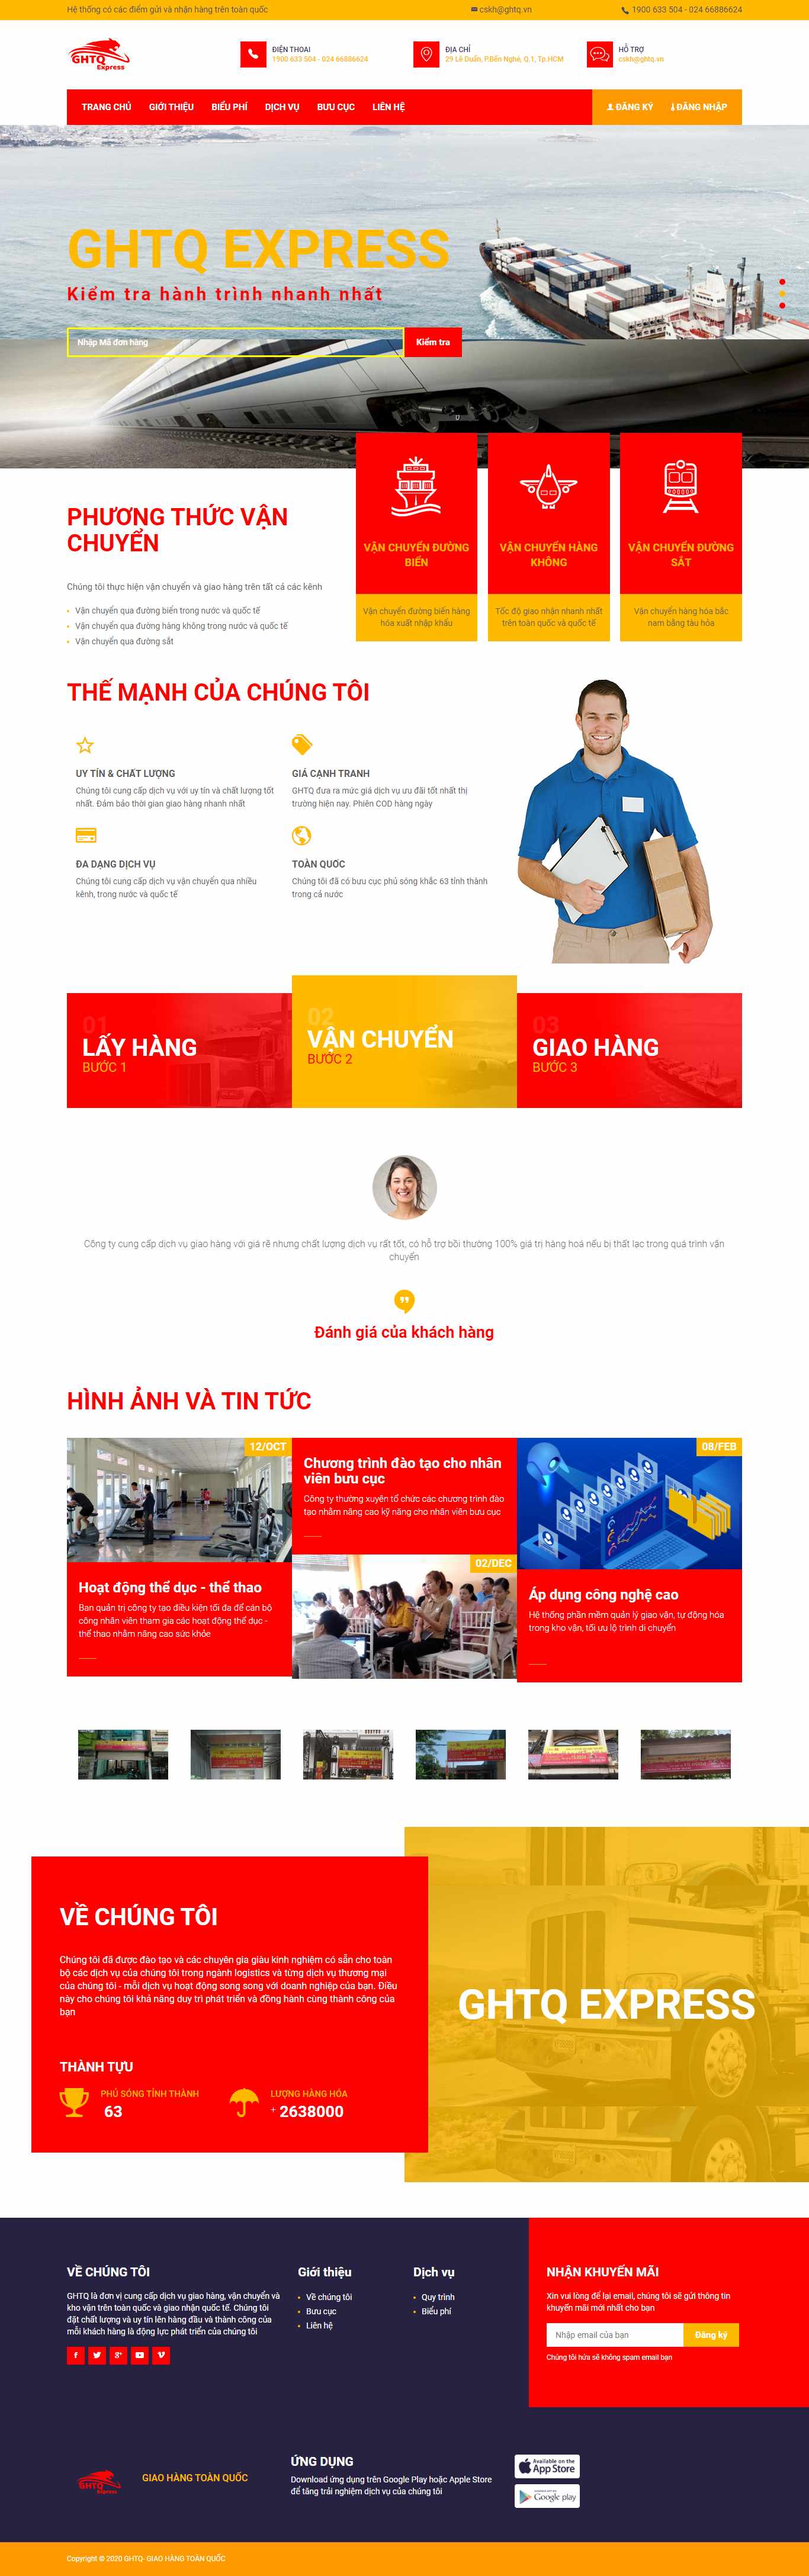 Thiết kế Website giao hàng - ship hàng - giaohangtoanquoc.vn